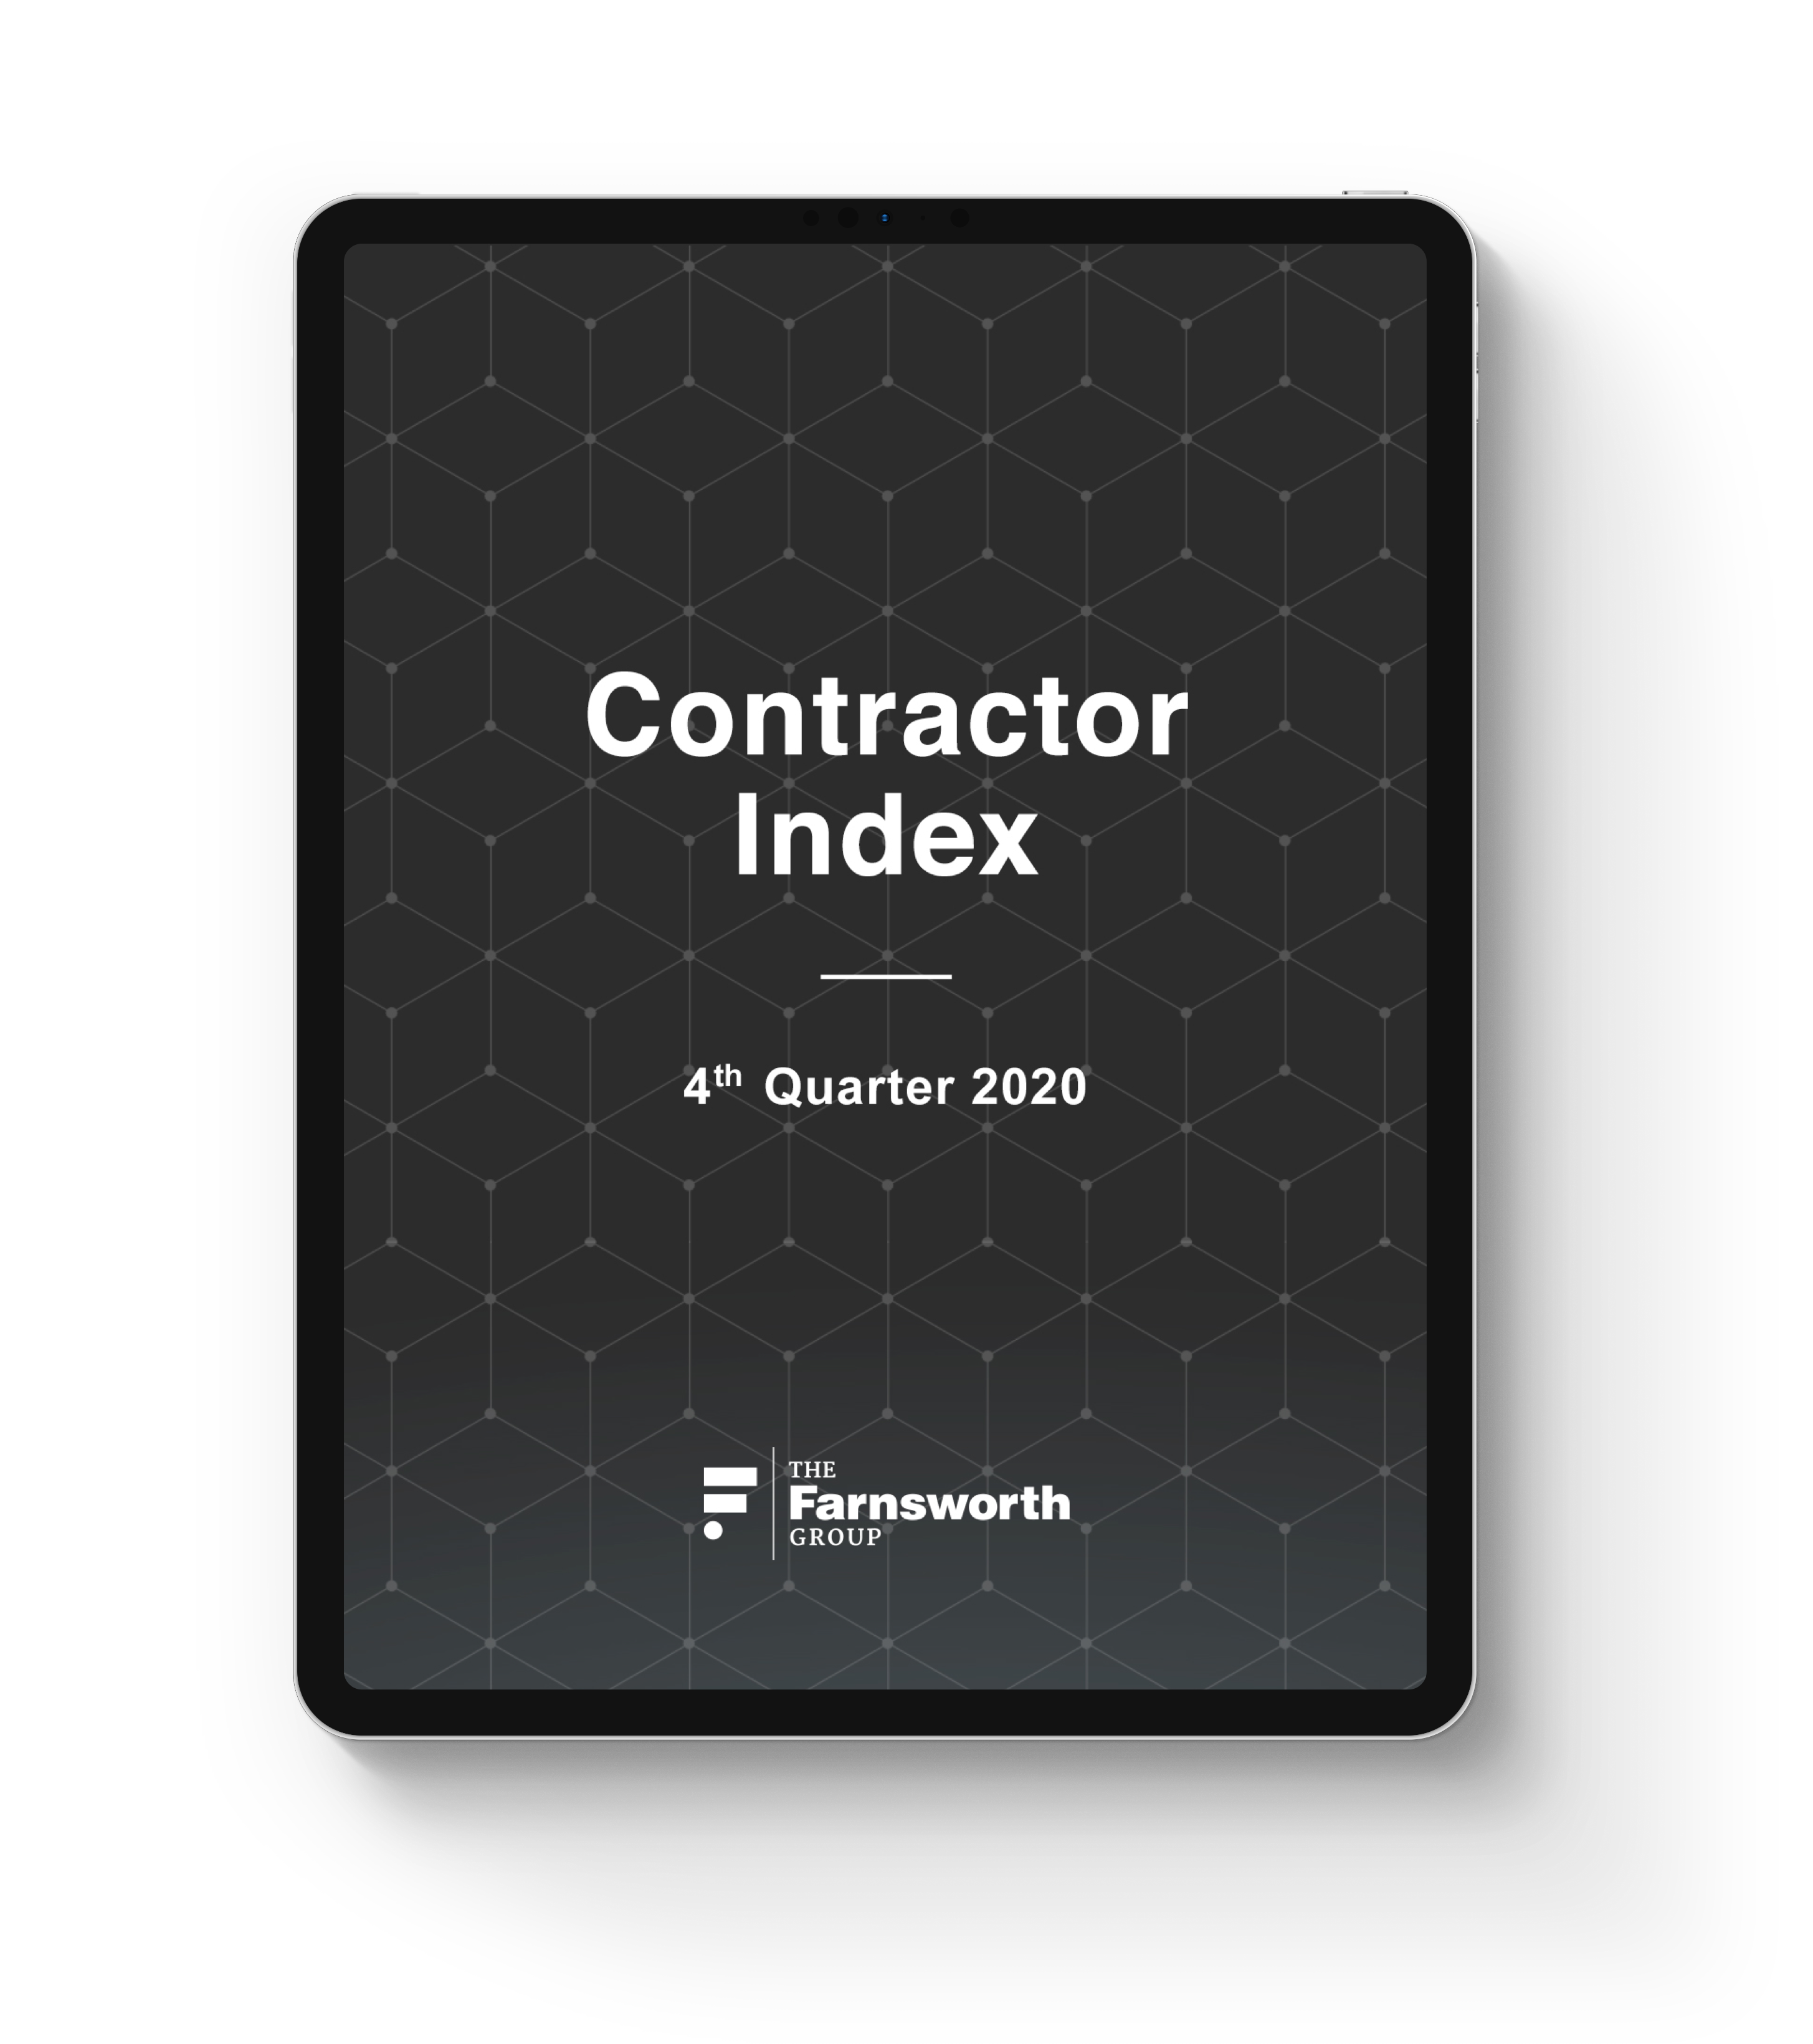 Farnsworth_Contractor Index_2020 Q4_iPad Mockup